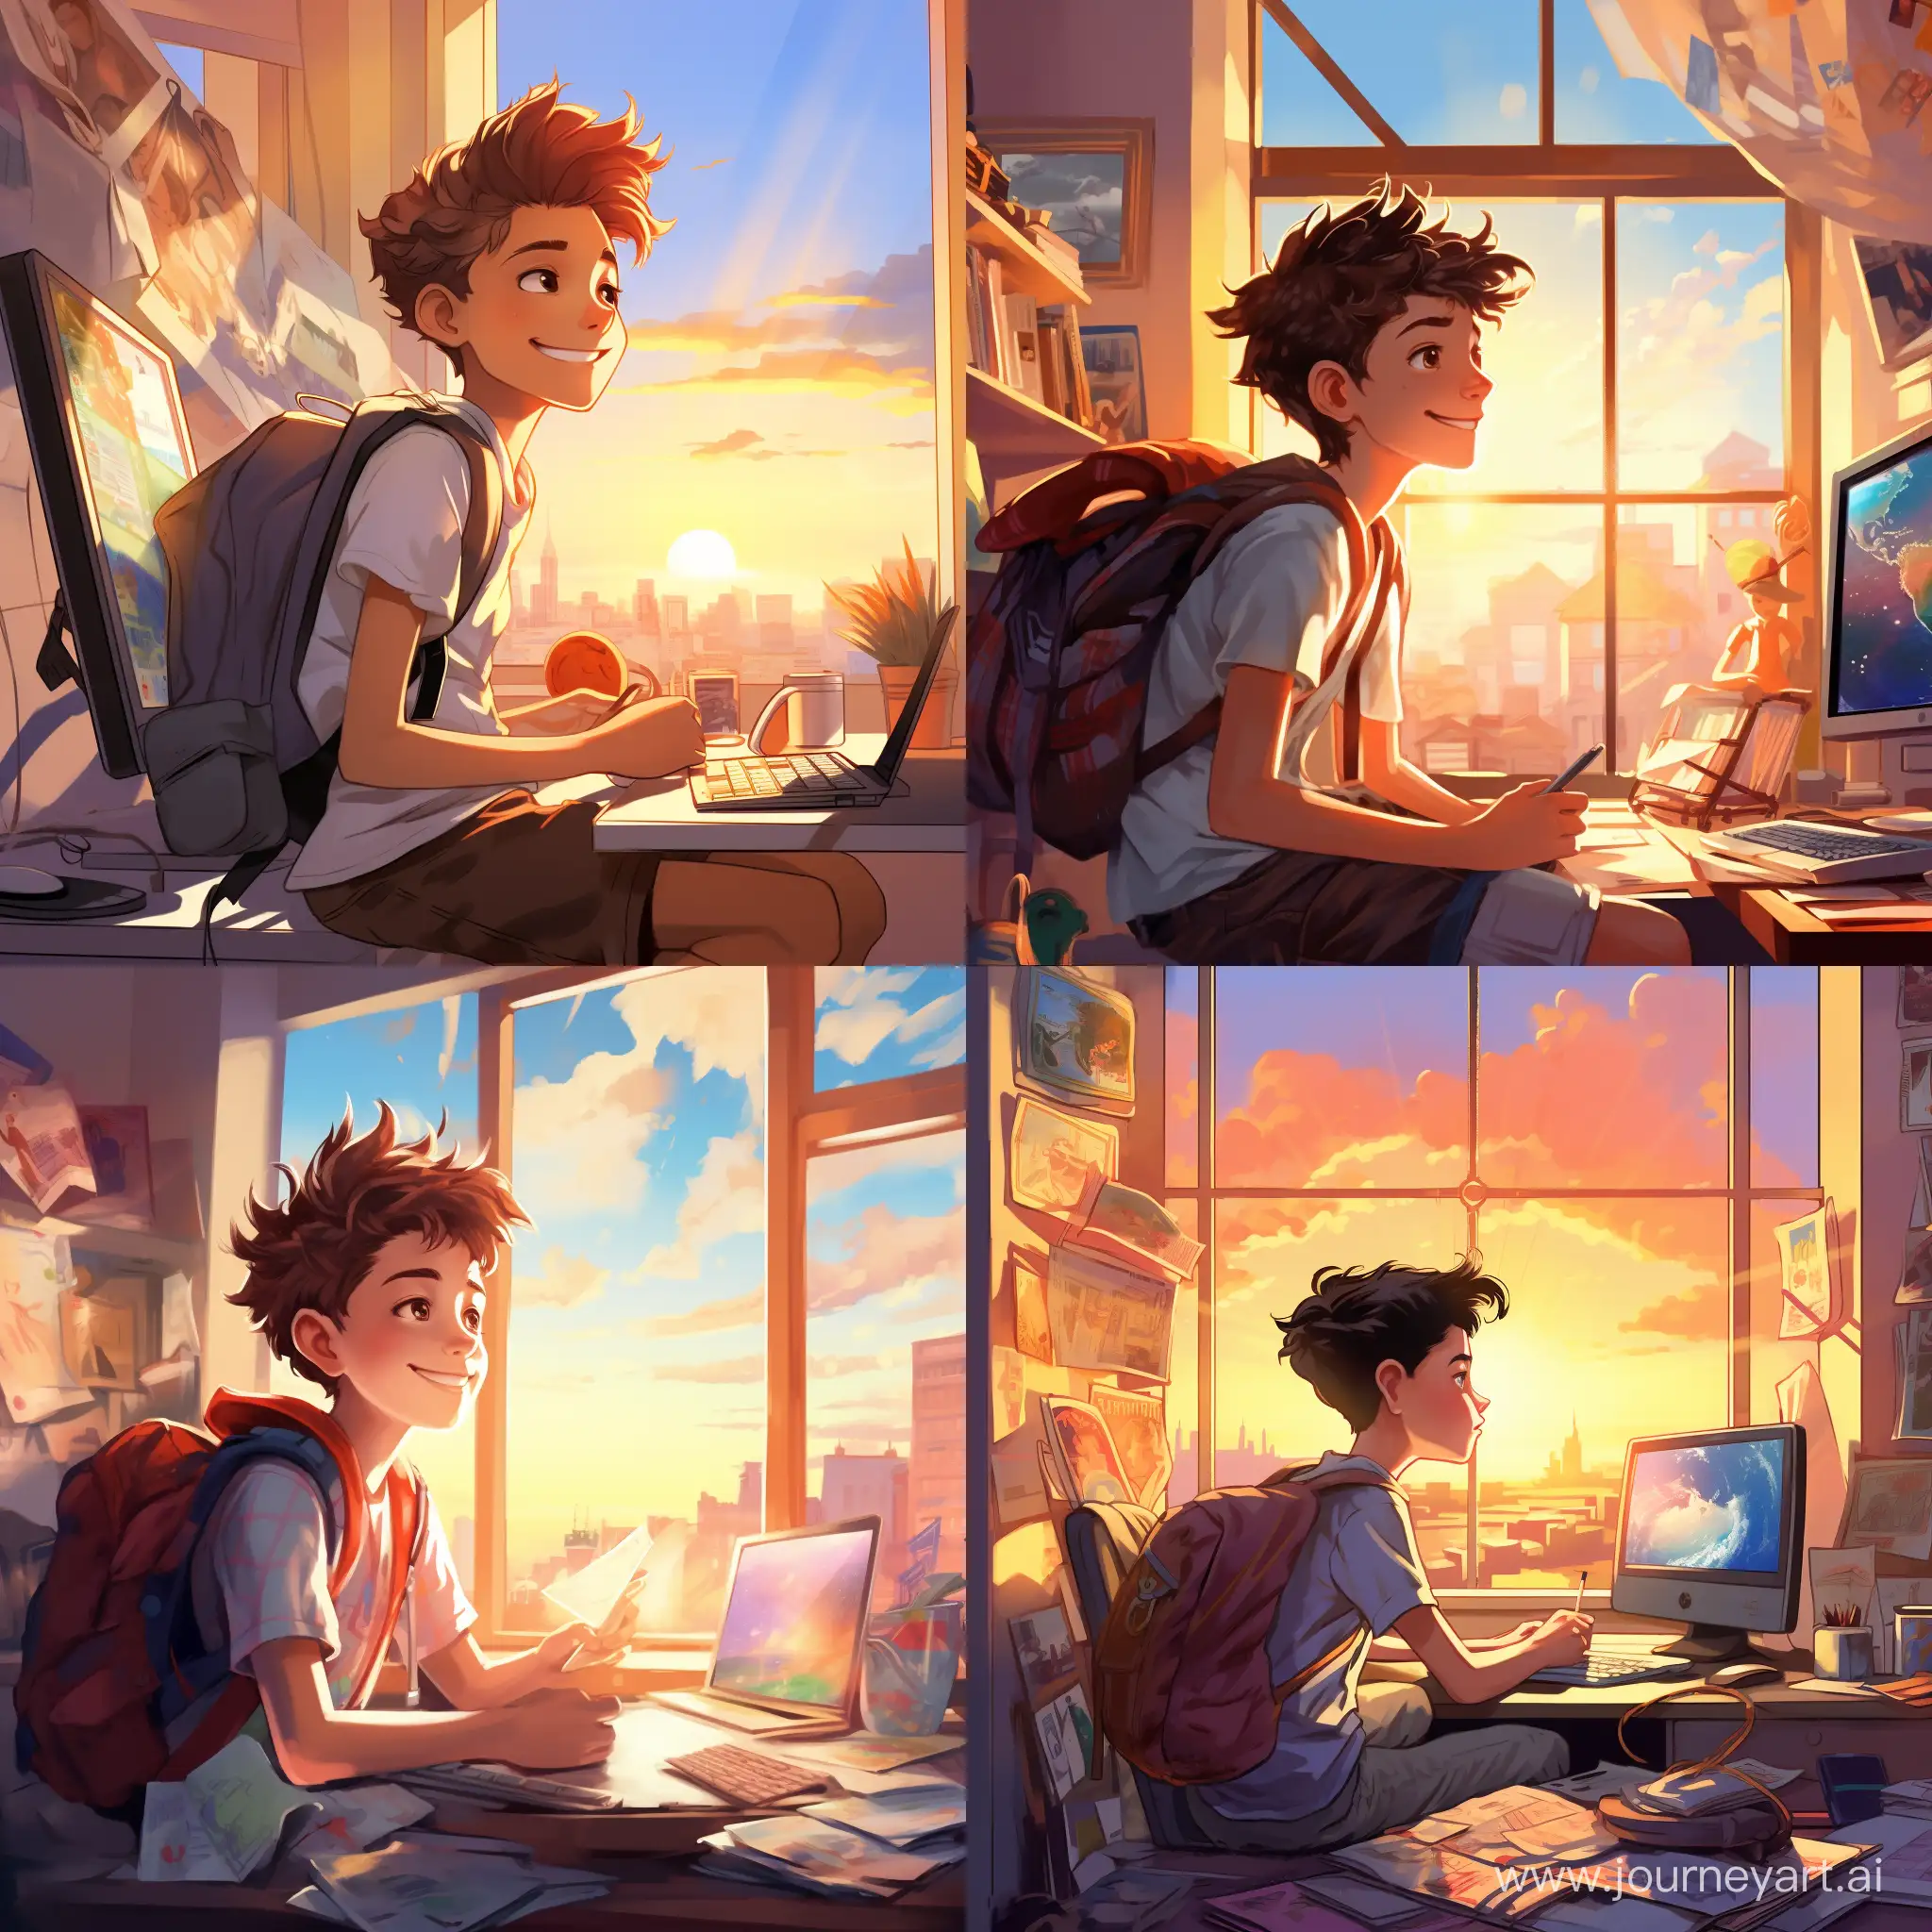 Impatient-Teen-at-Computer-Desk-Amid-Futuristic-Scene